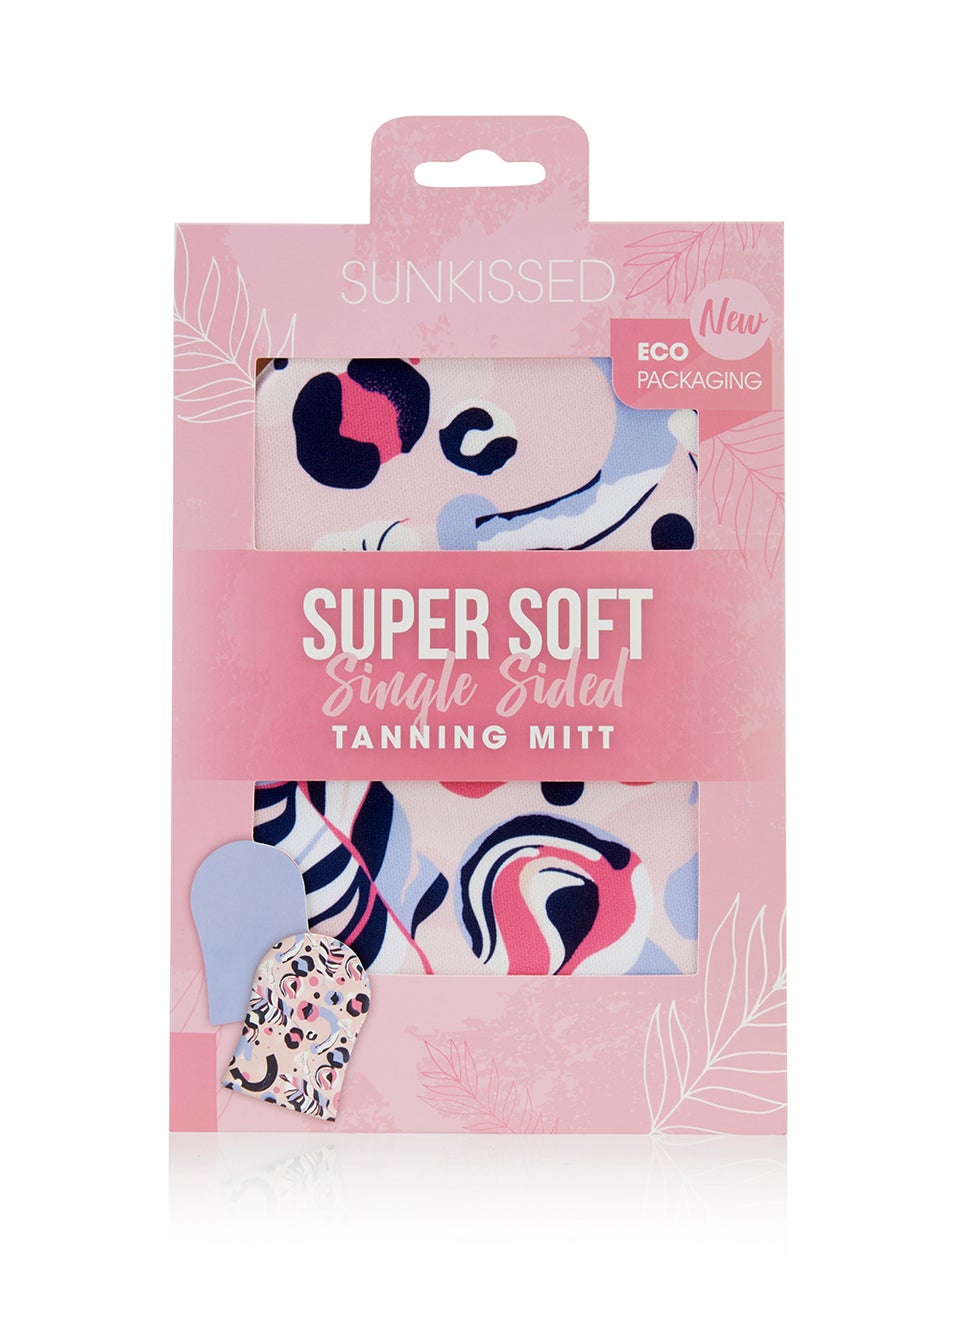 Sunkissed Super Soft Tanning Mitt